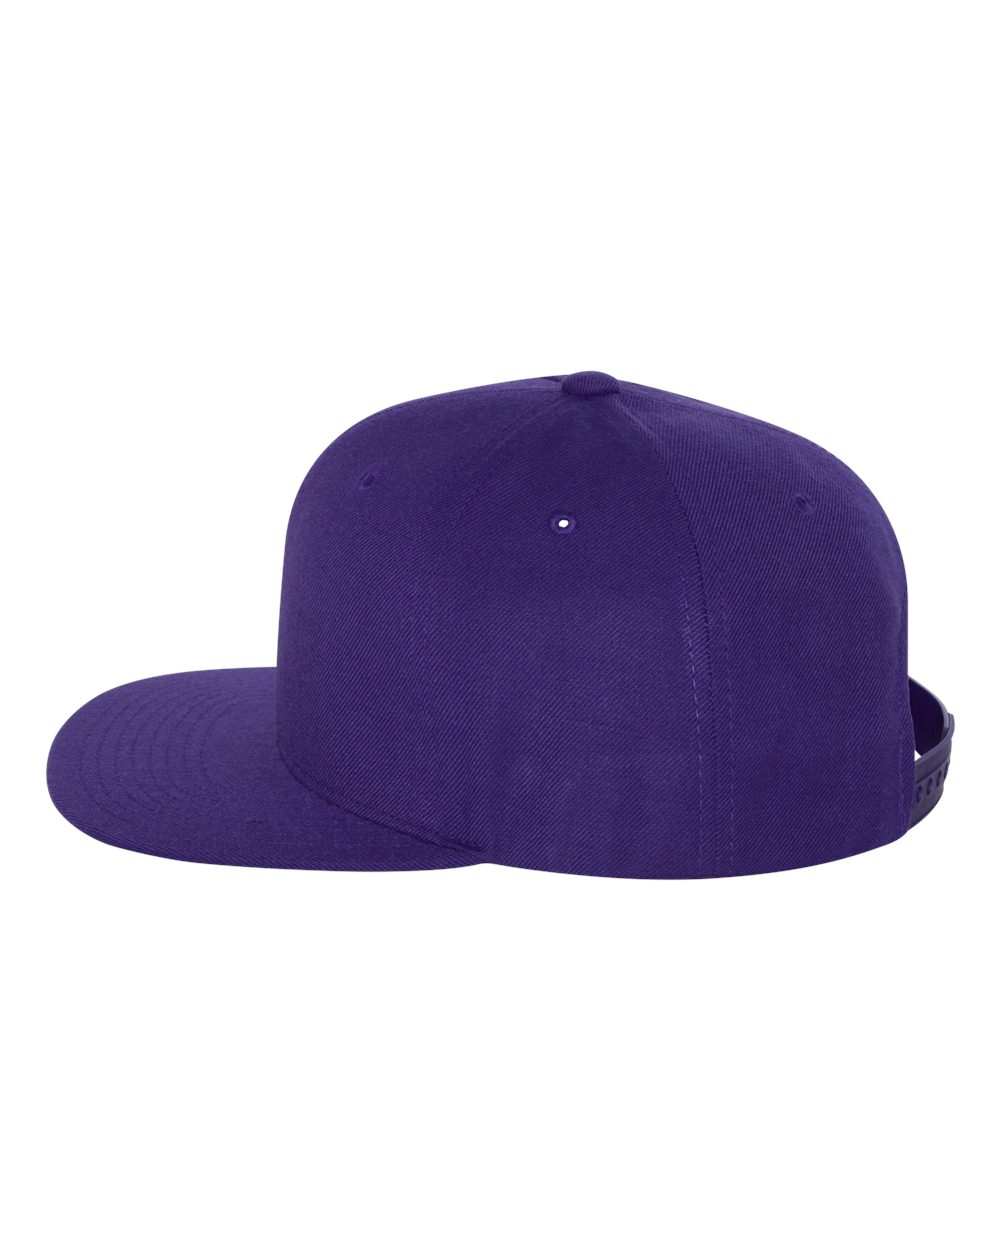 VINTAGE STREN FISHING Line Snapback Hat Cap 90s Dad Men Women Father Purple  Blue $10.00 - PicClick